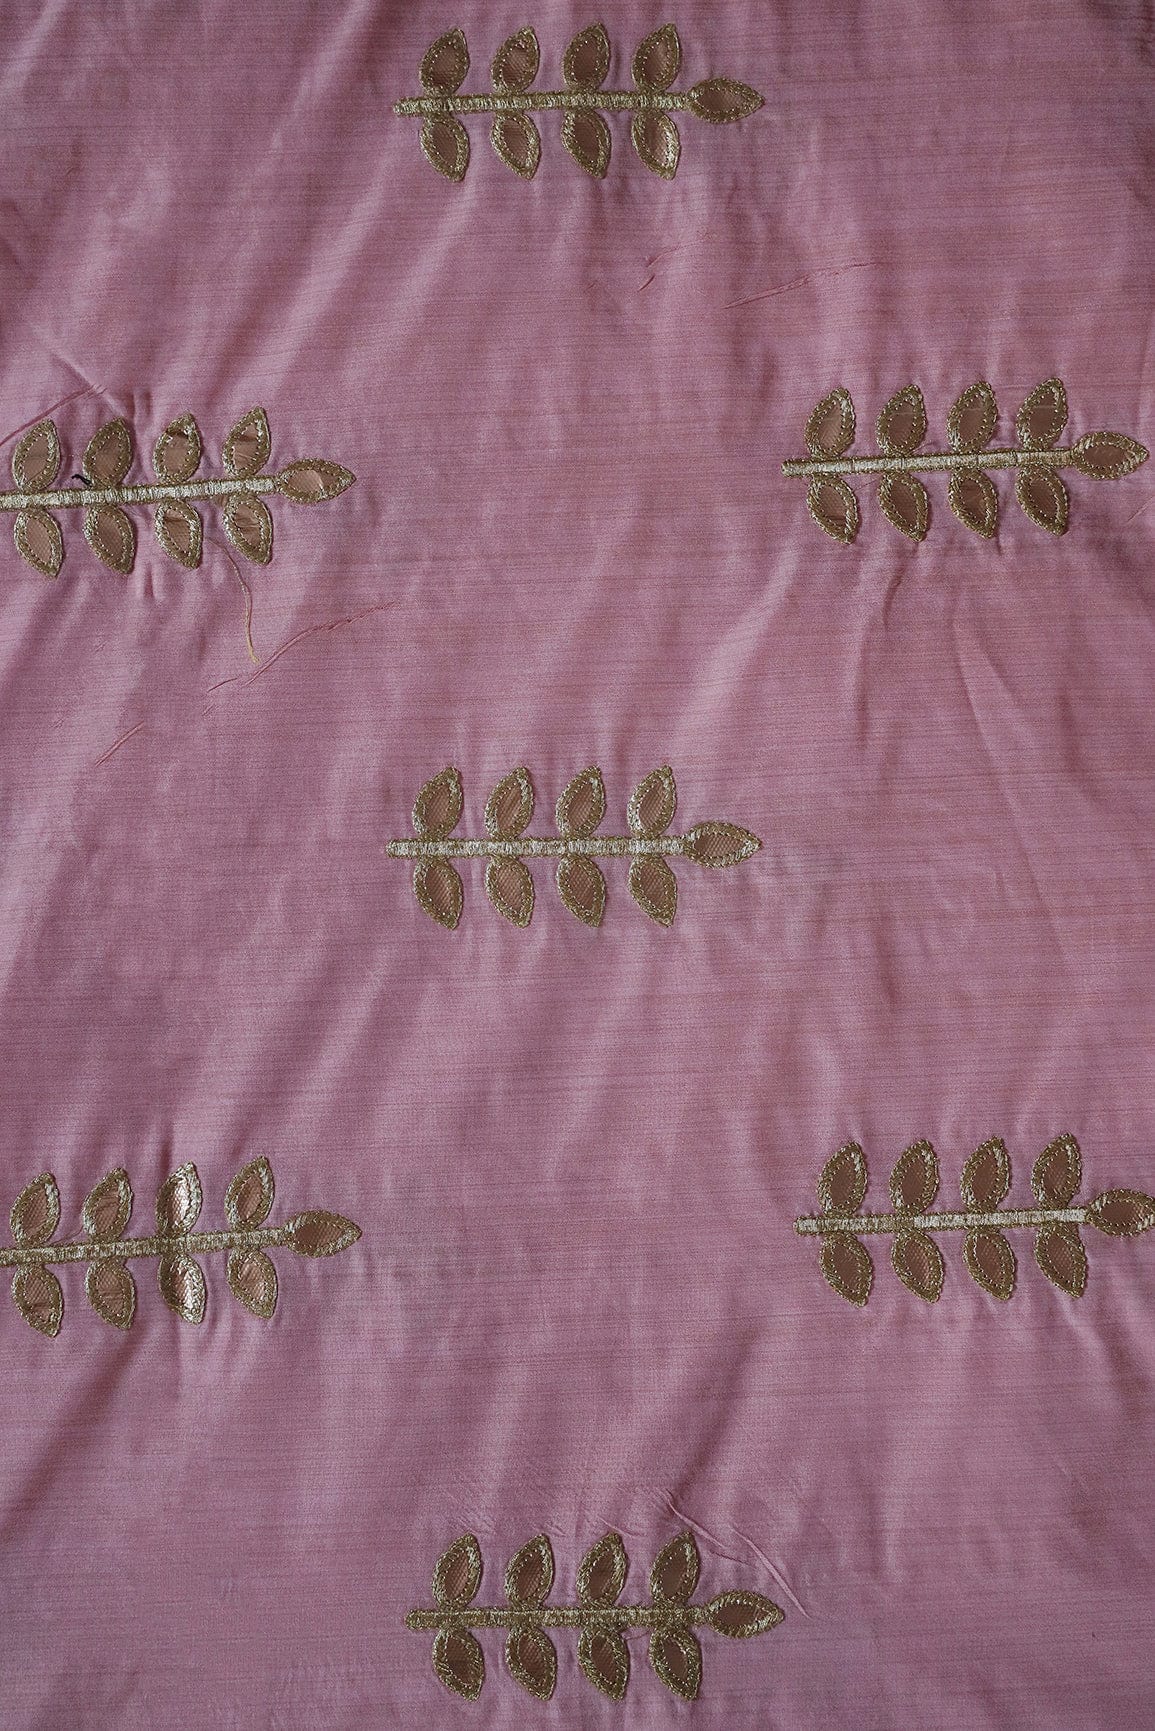 doeraa Embroidery Fabrics Zari With Leafy Embroidery On Pink Bamboo Silk Fabric